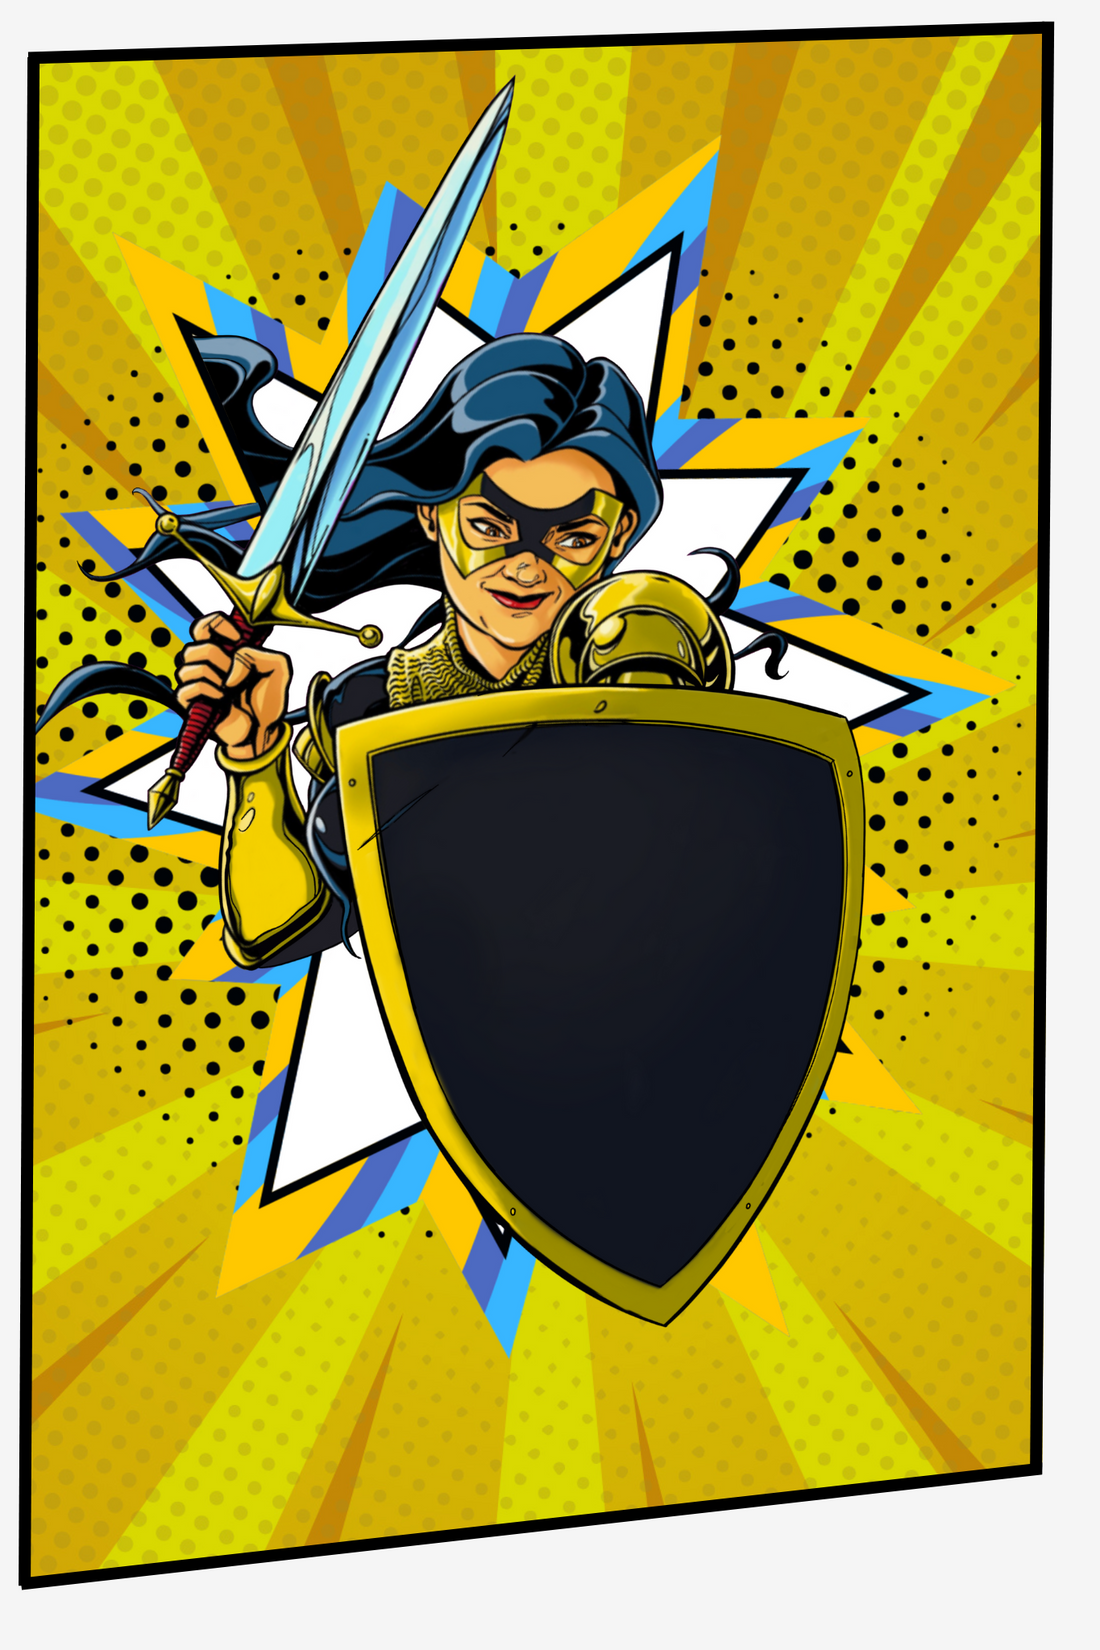  Superhero woman with shield and sword